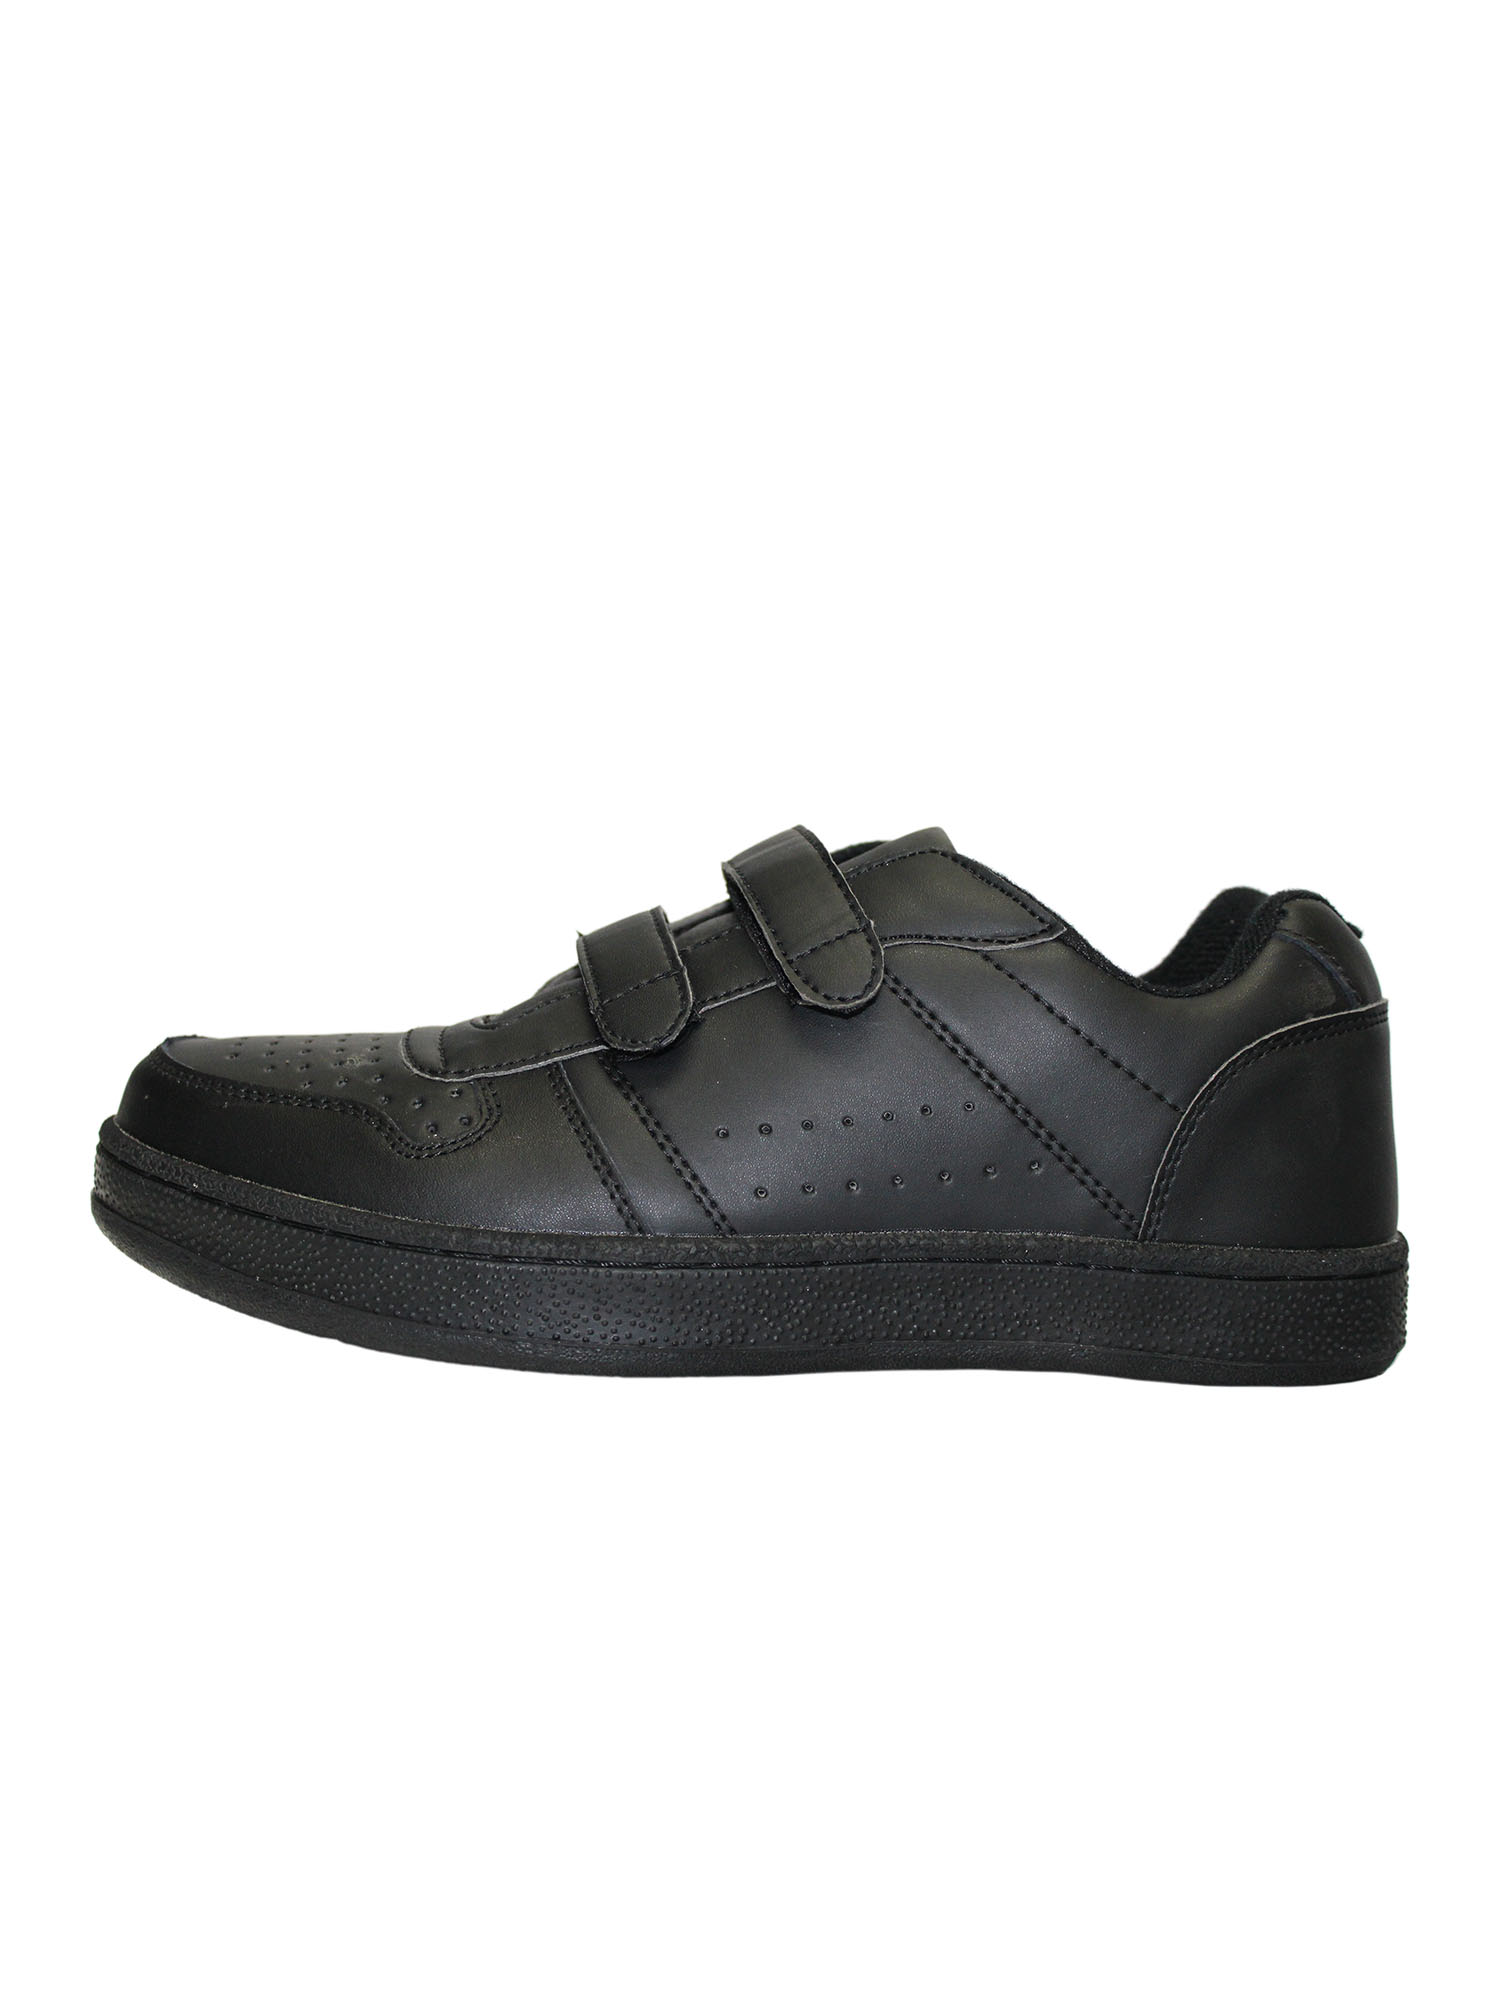 Tanleewa Men's Leather Strap Sneakers Lightweight Hook and Loop Walking Shoe Size 15 Adult Male - image 2 of 4